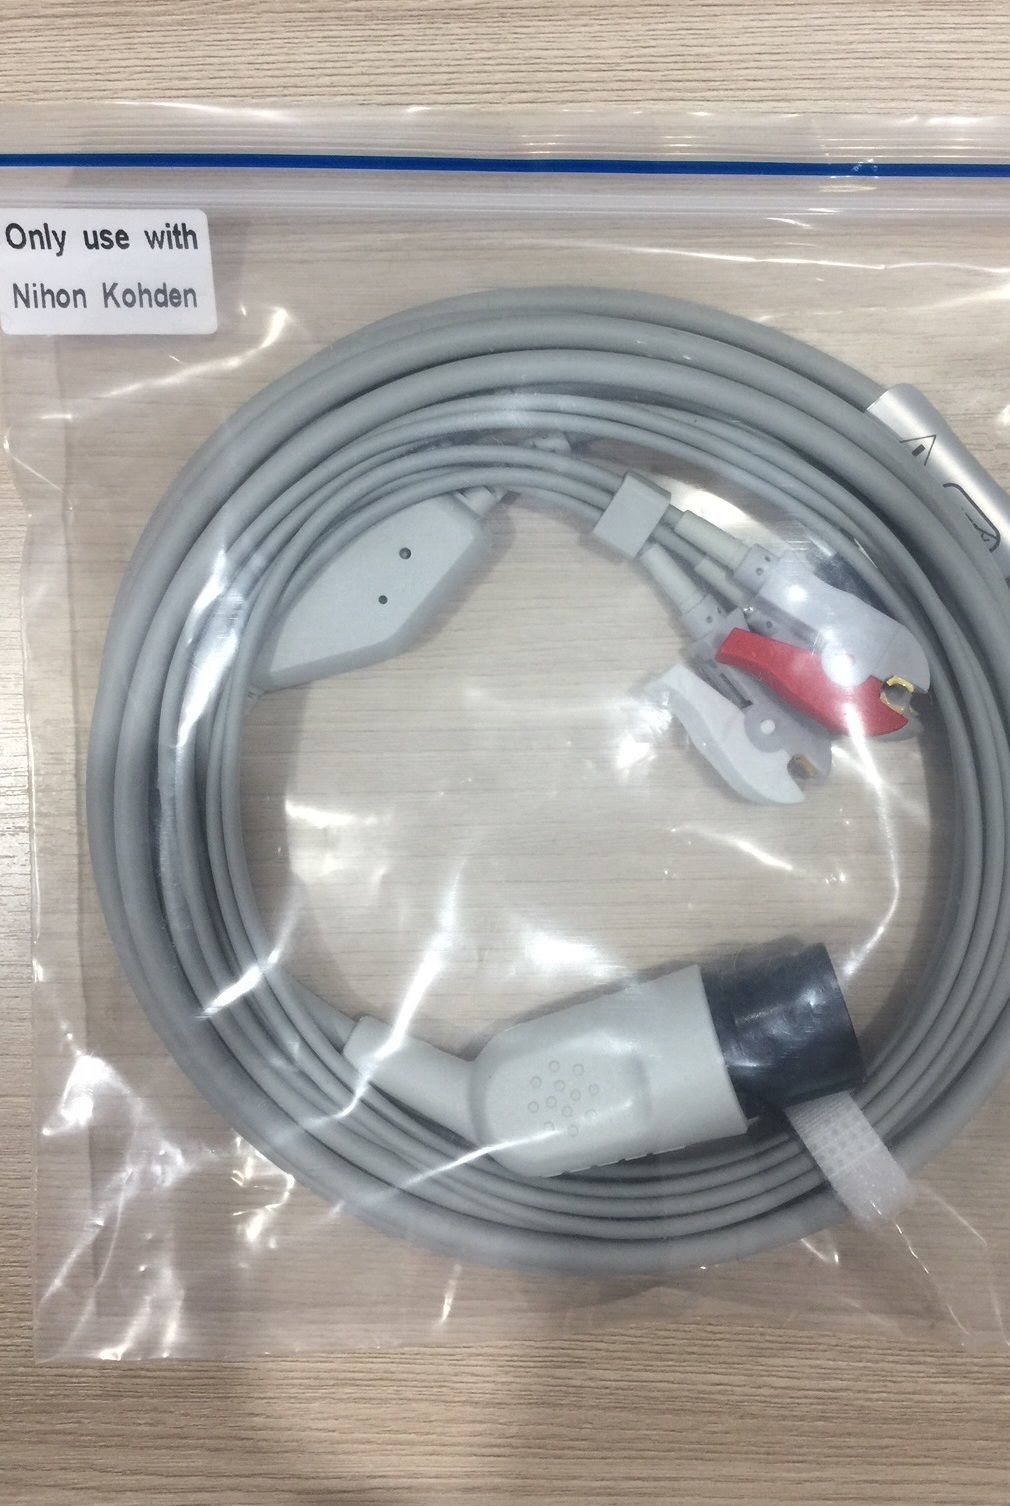 ECG lead wire with trunk cable for Nihon Kohden_สายเคเบิ้ลอีซีจีสำหรับเครื่องมอนิเตอร์ Nihon Kohden รุ่นเก่า